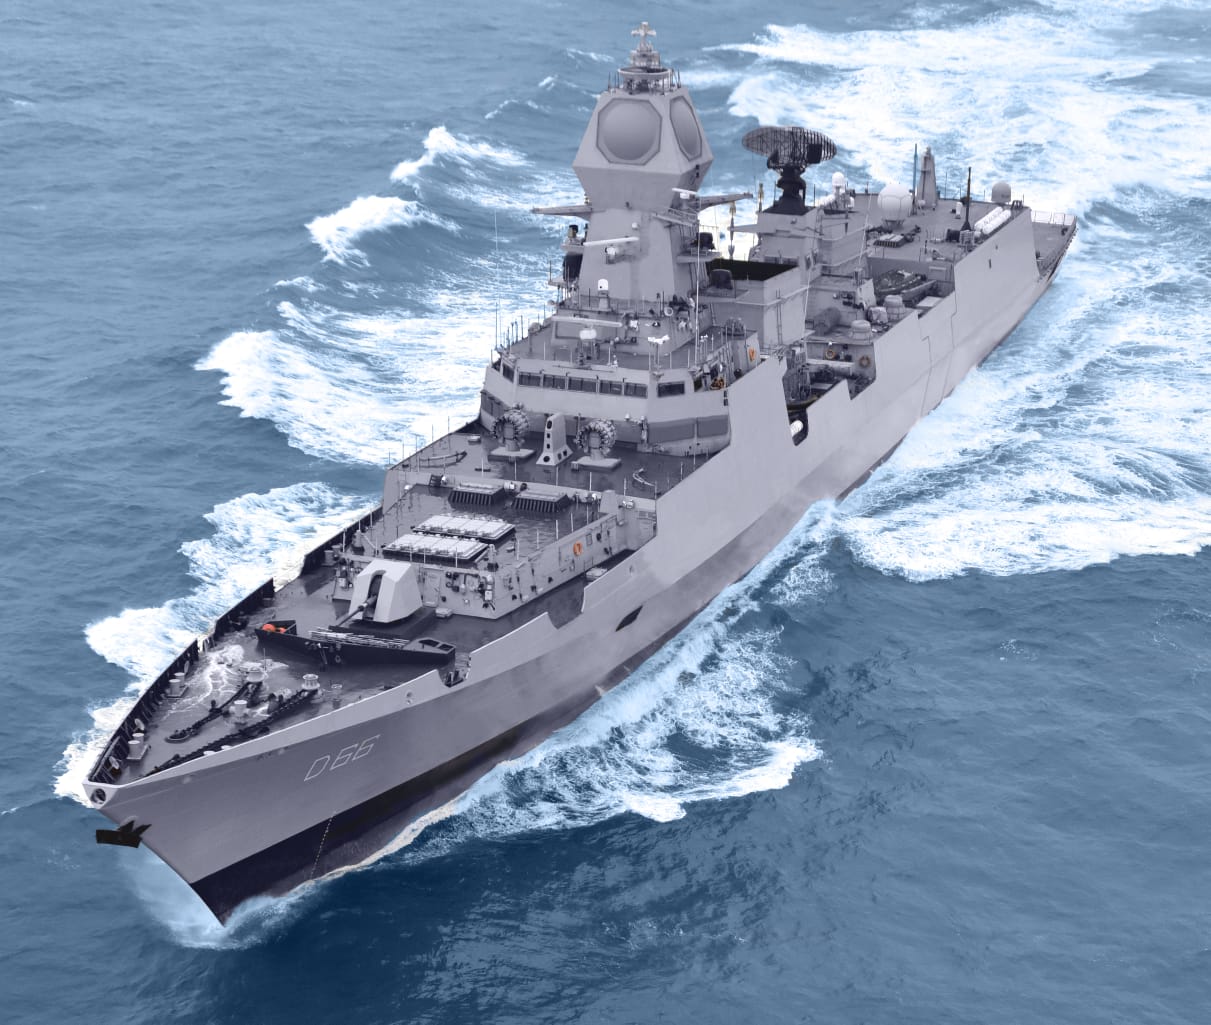 Visakhapatnam_(D66)_-_P15B_destroyer_of_Indian_Navy_during_sea_trials.jpg